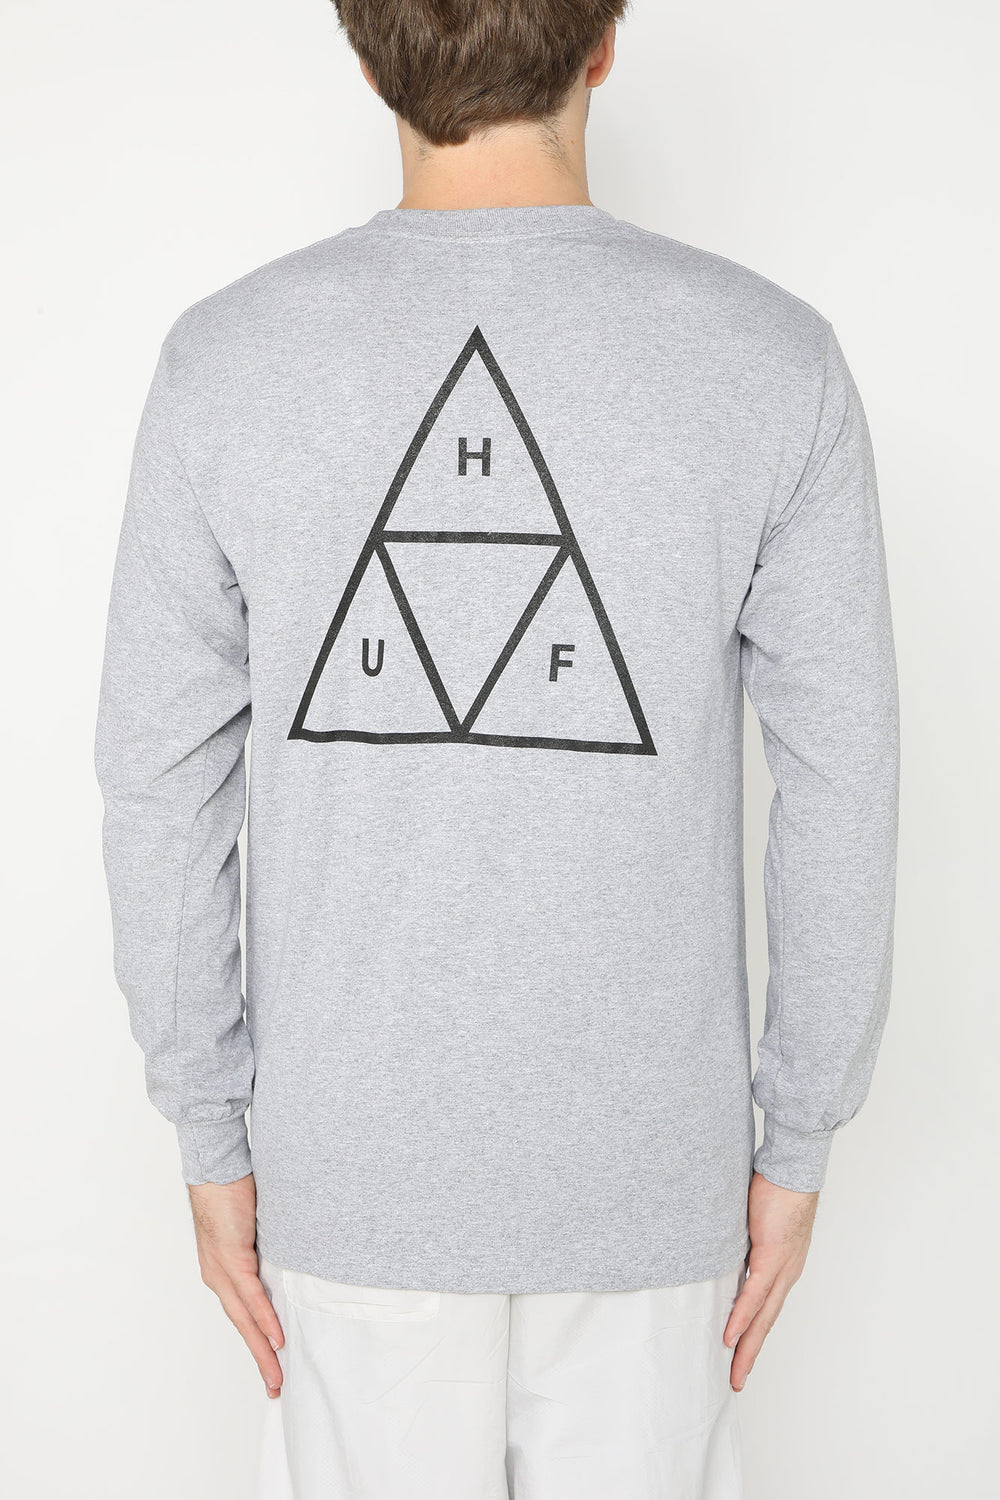 HUF Essentials Triple Triangle Long Sleeve Shirt Heather Grey